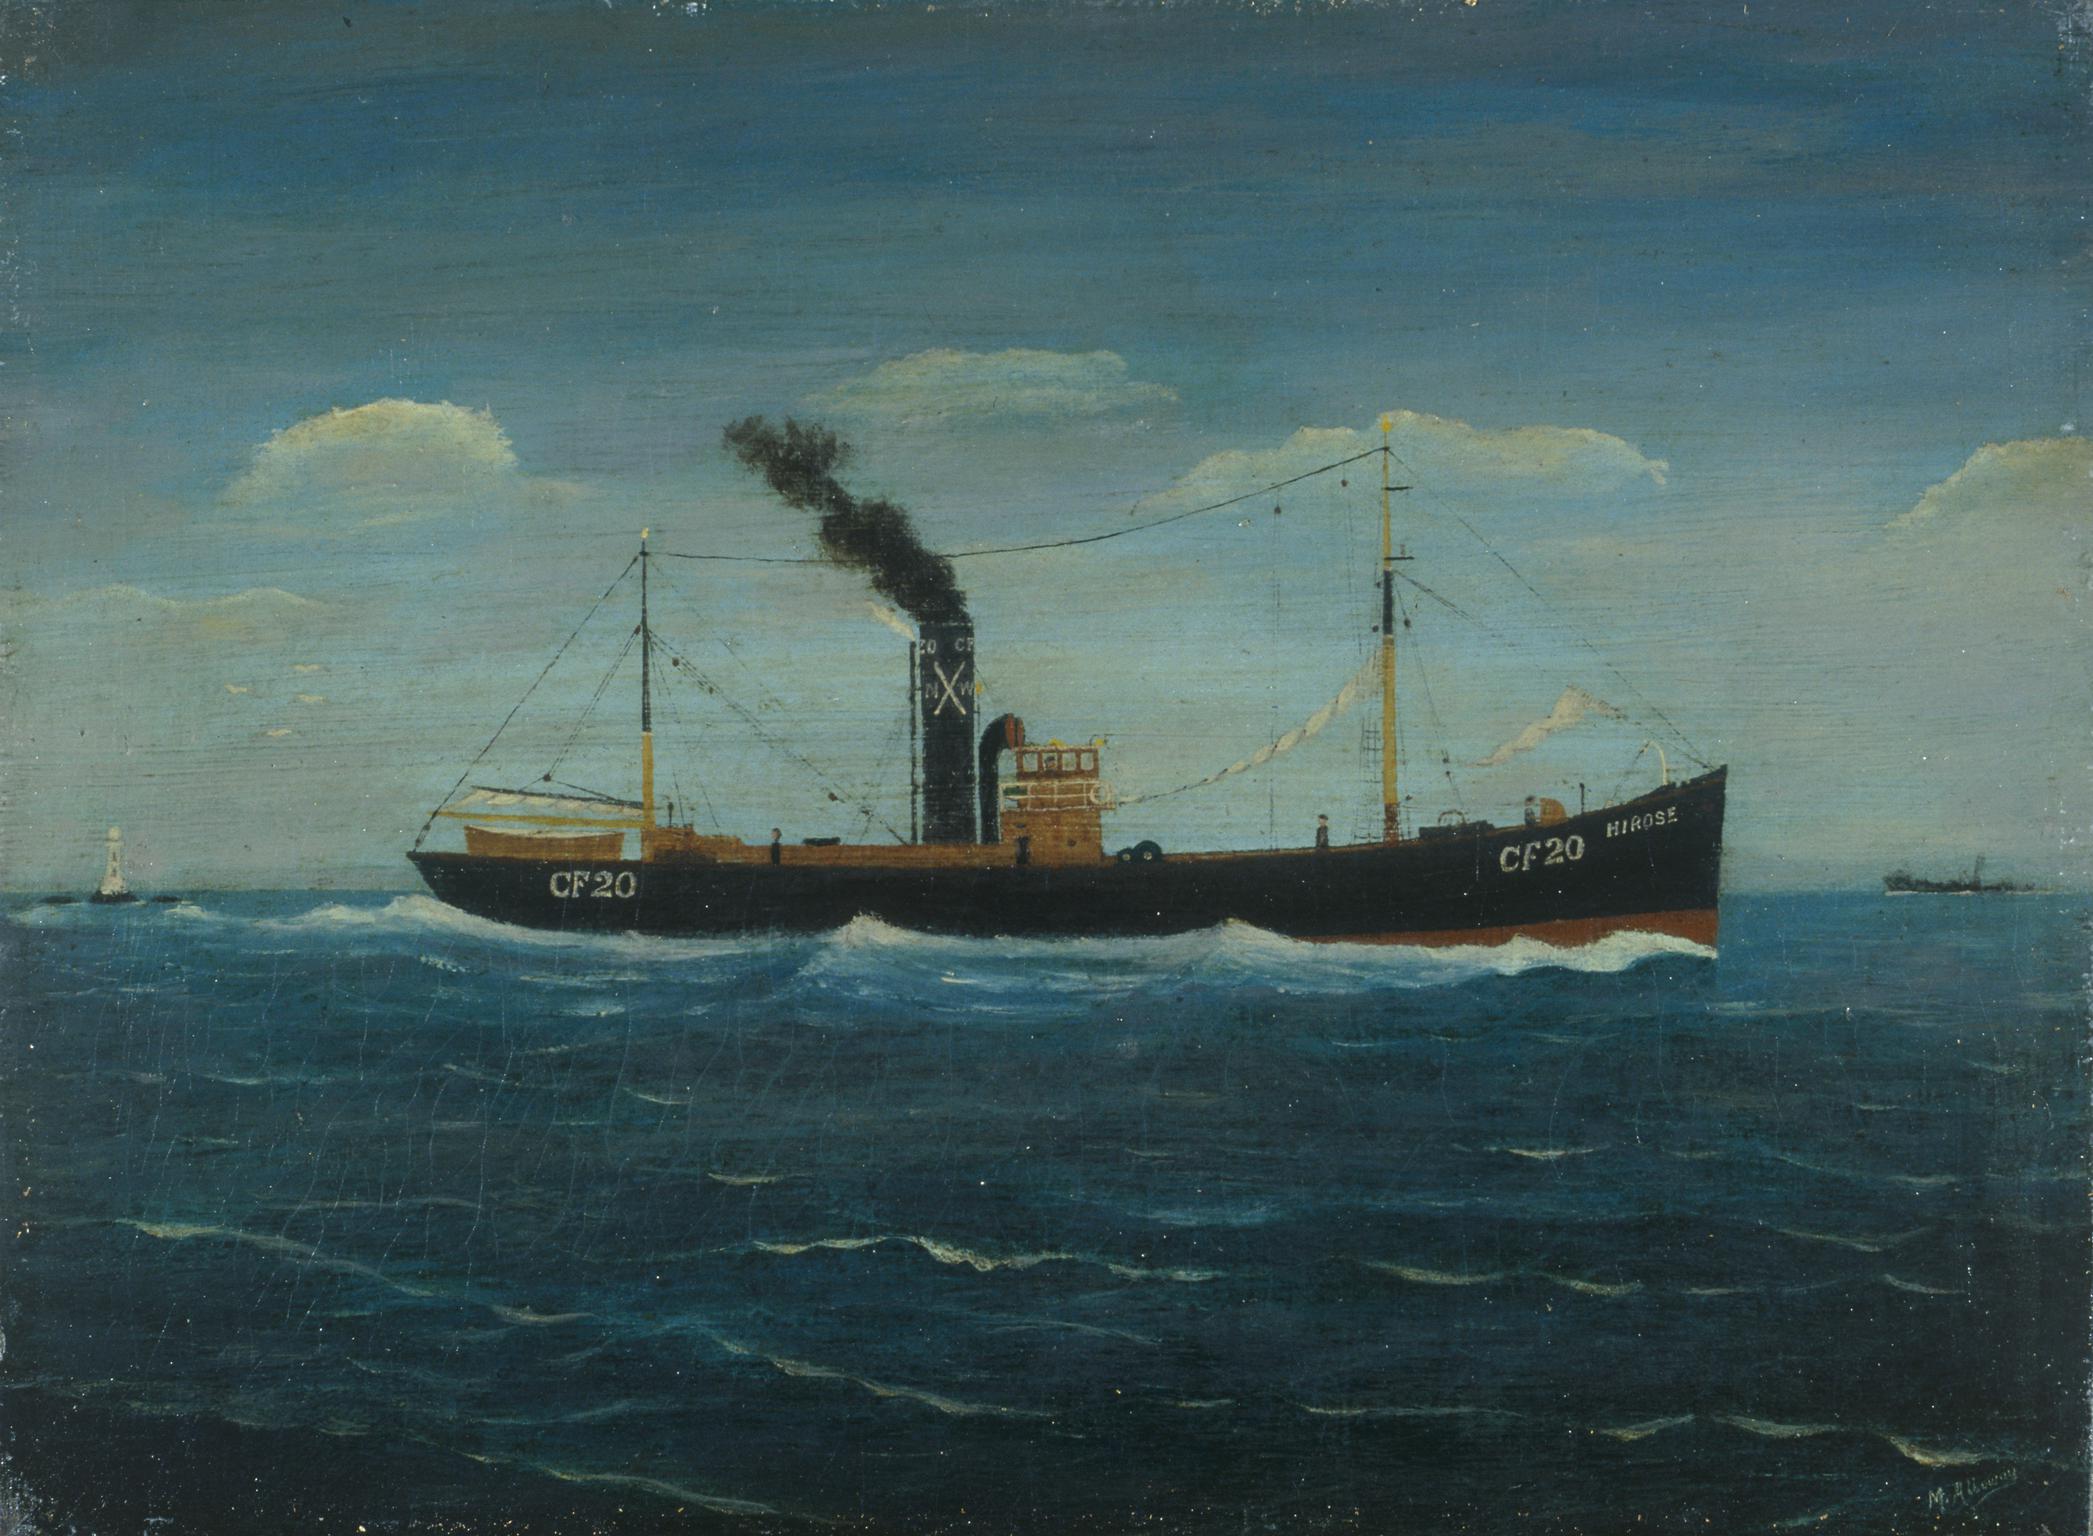 Trawler HIROSE (painting)